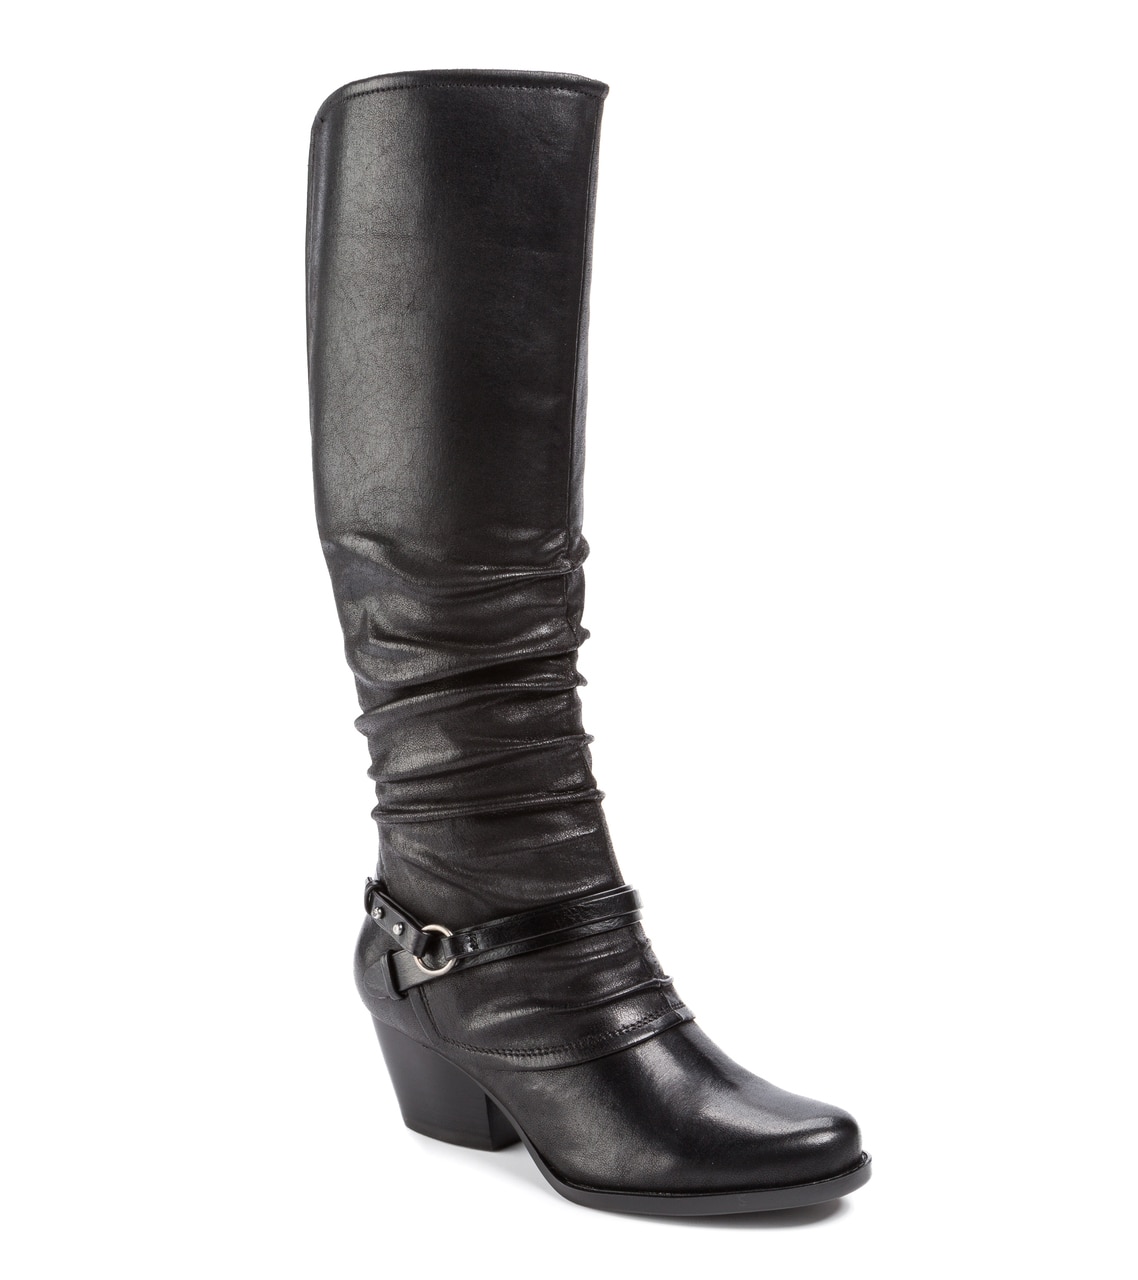 Bare Traps Womens Boots in Black Color, Size 5.5 NVT | eBay